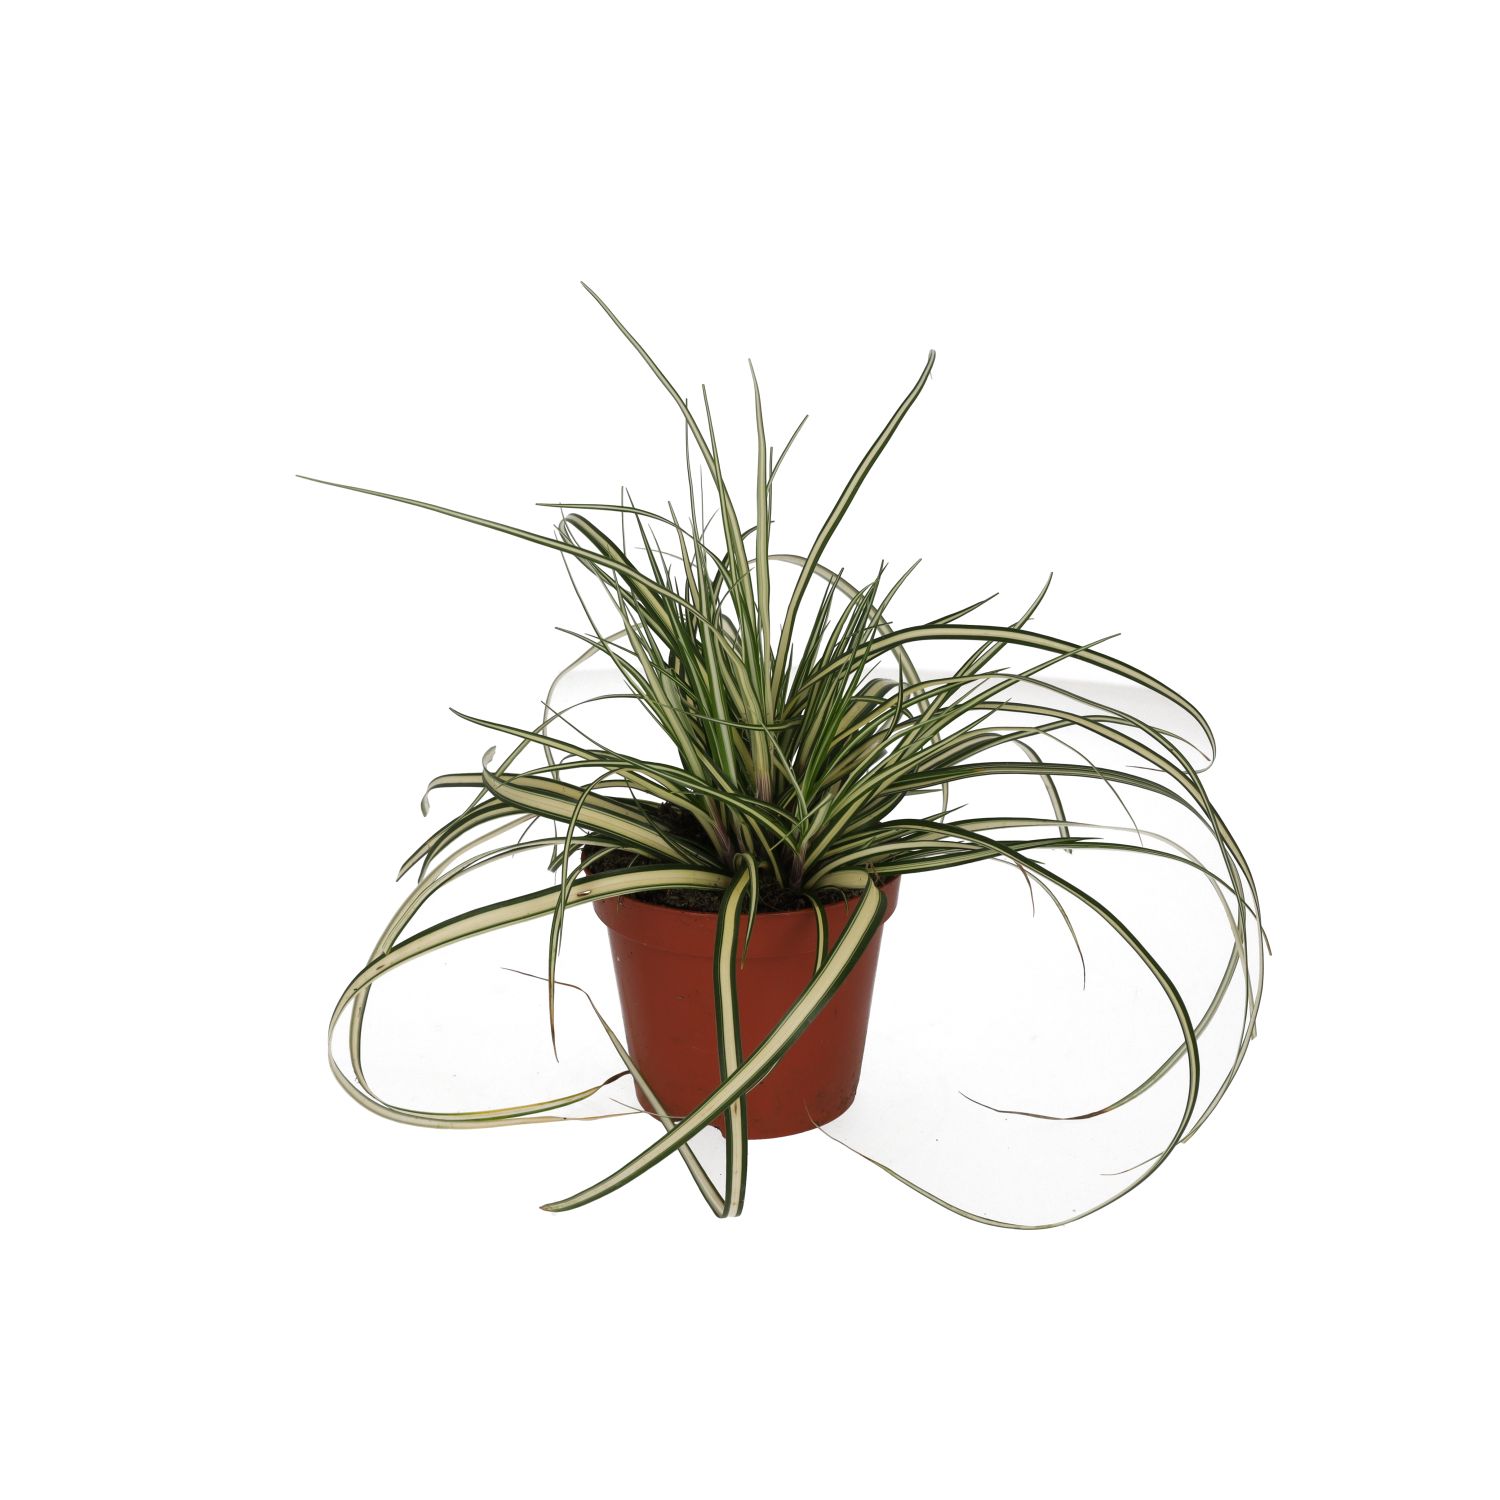 PR Live plant. Sedge Grass 'Evergold' (Medium)